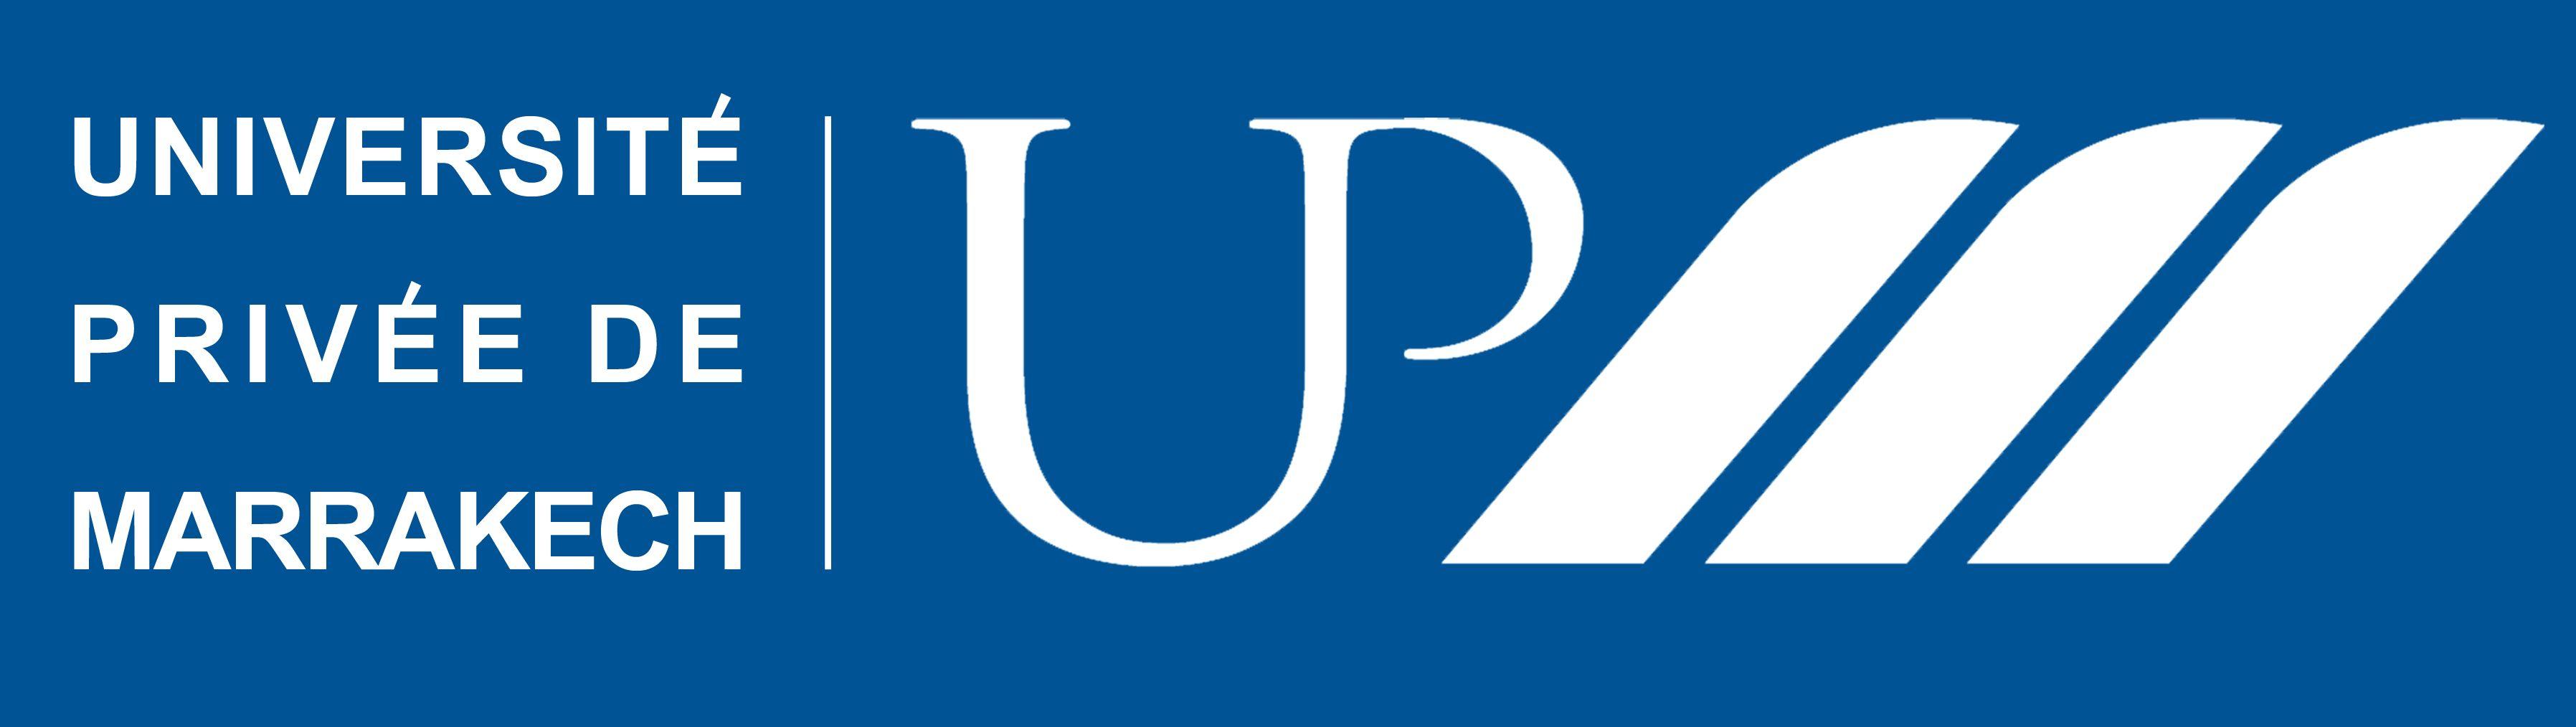 UPM Logo - LOGO UPM PRIVEE DE